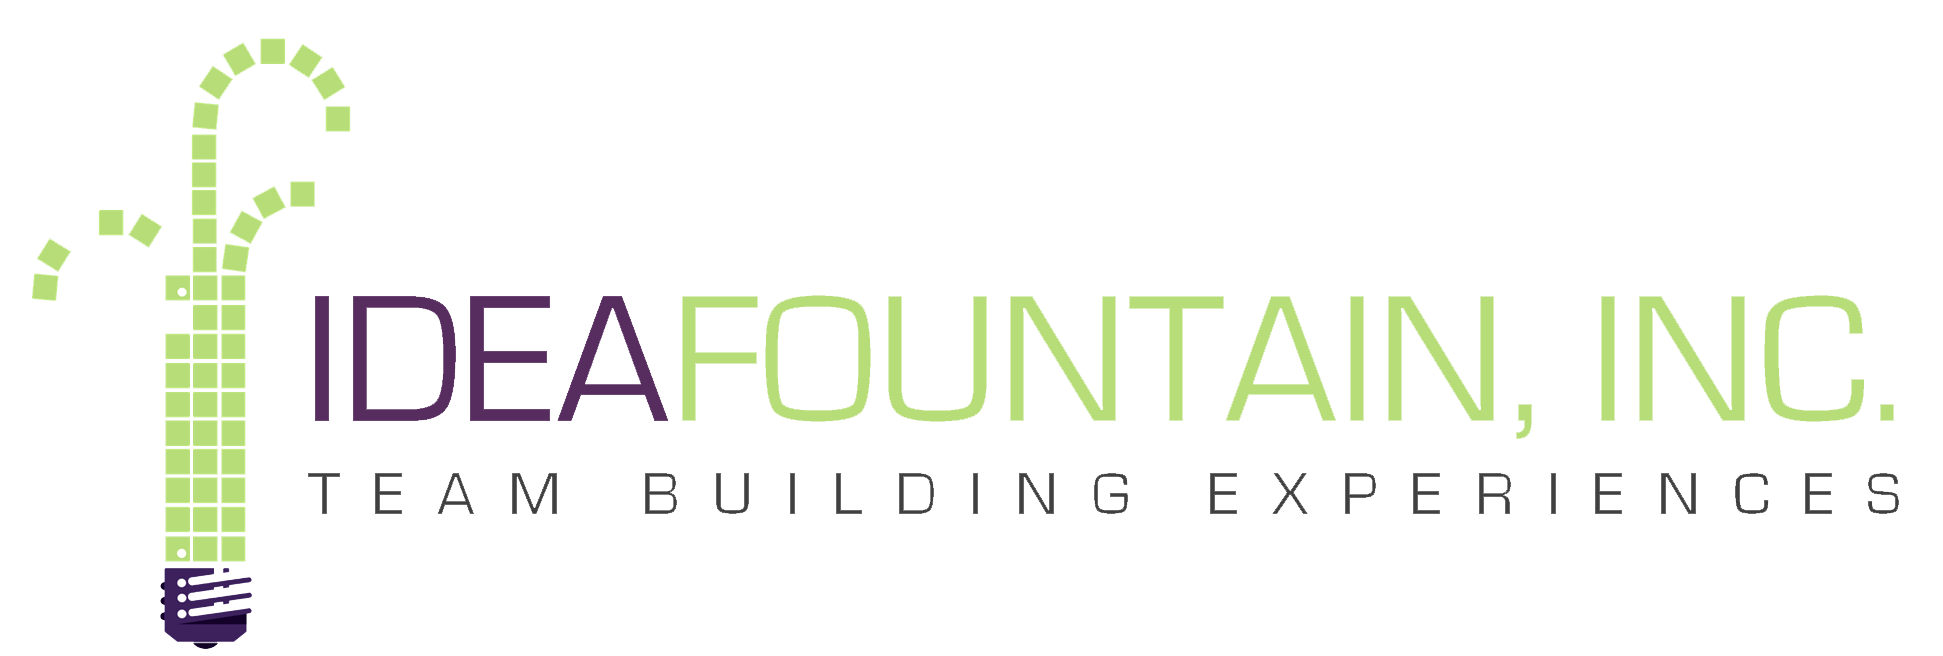 dea Fountain, Inc. Logo - Team Building Experiences